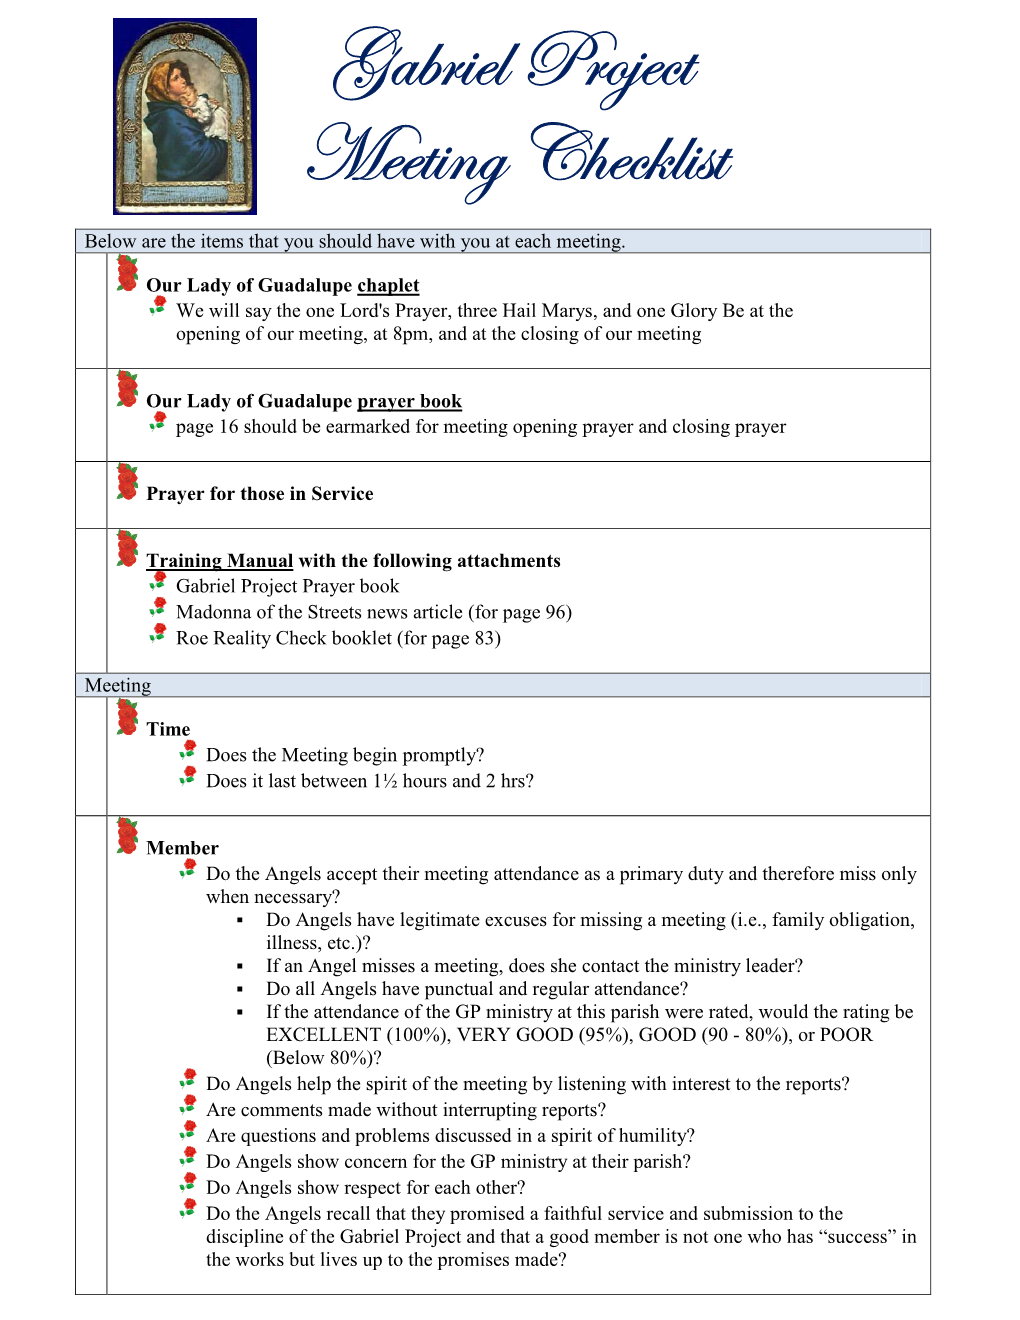 Gabriel Project Meeting Checklist